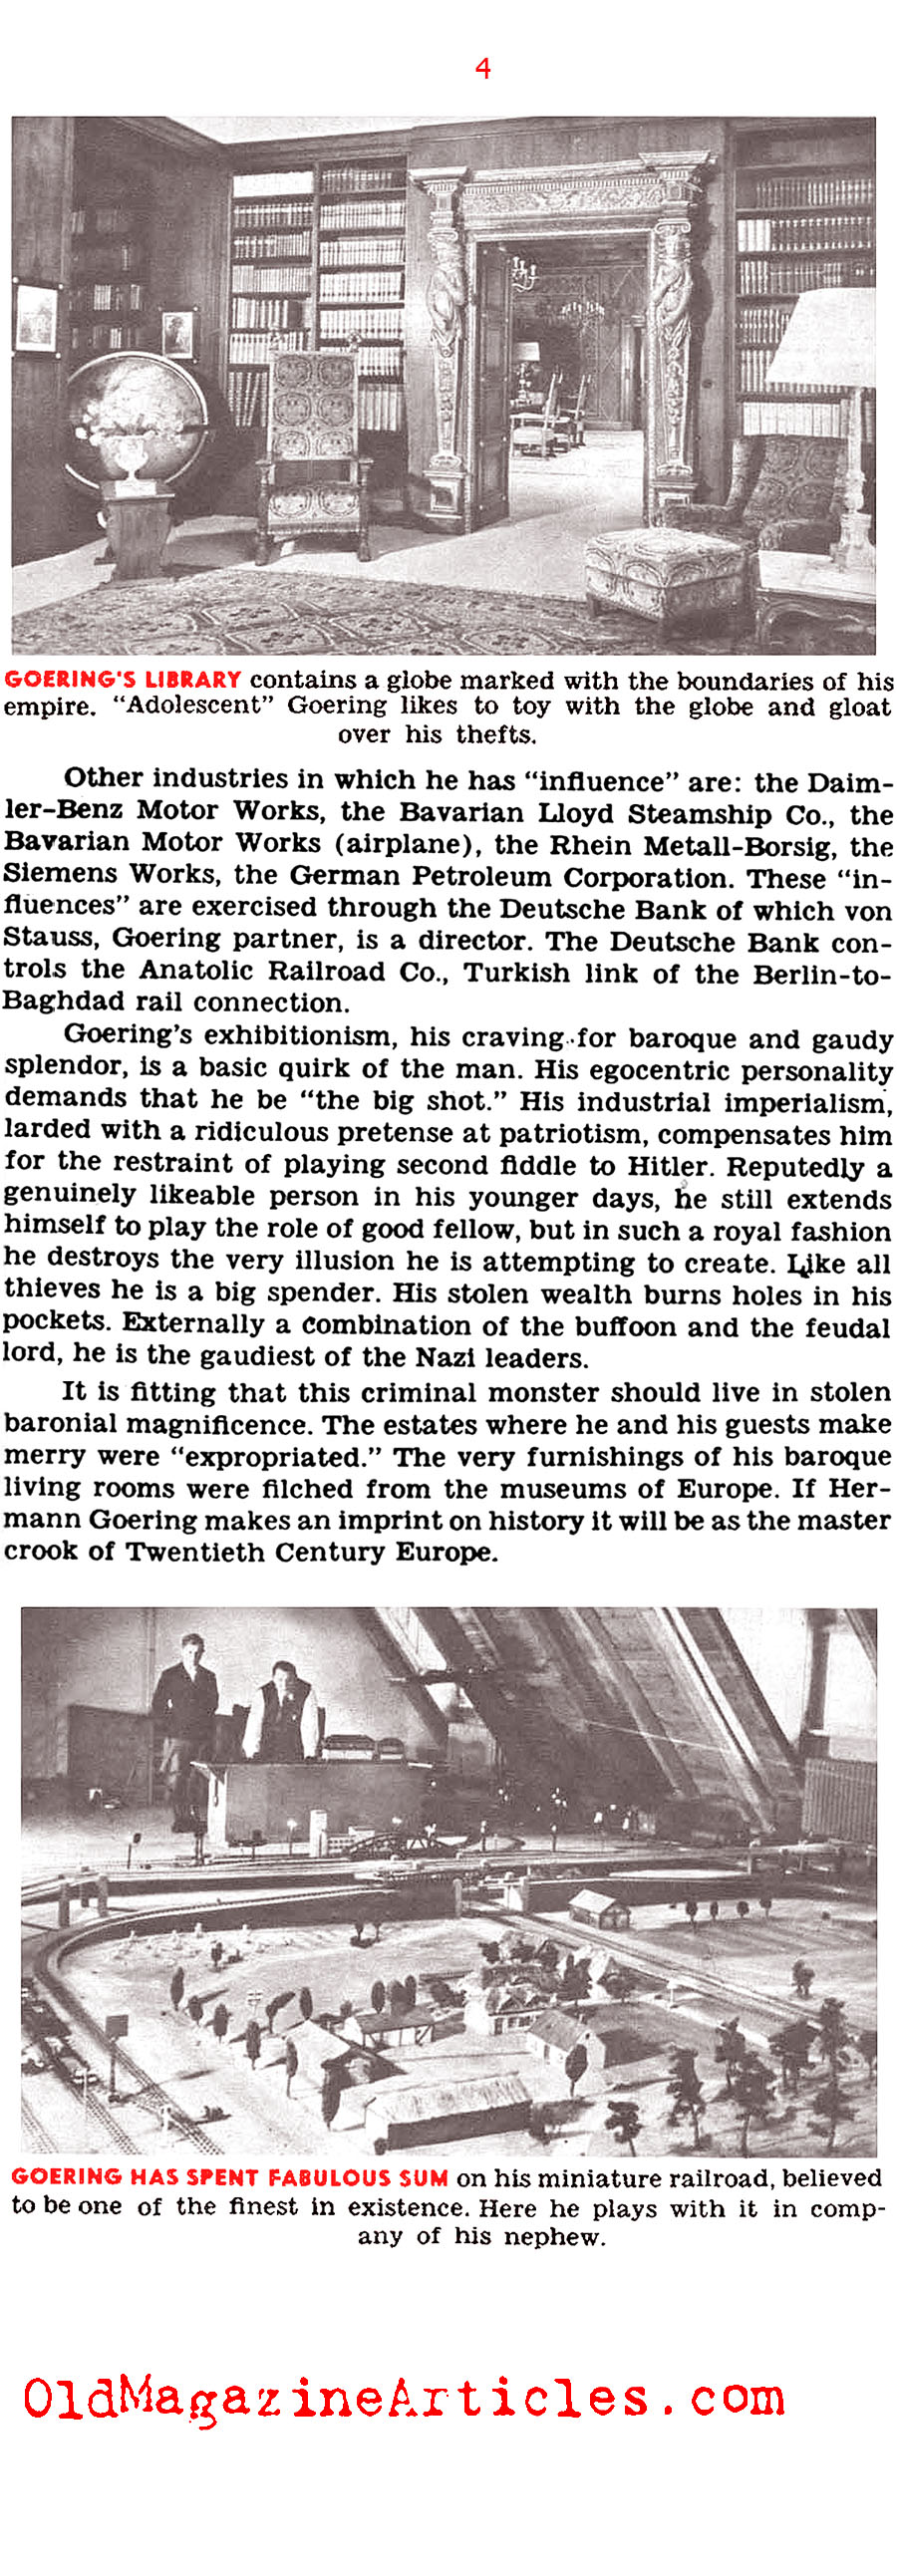 Hermann Goering: Power Hungry Graff Master (Click Magazine, 1943)